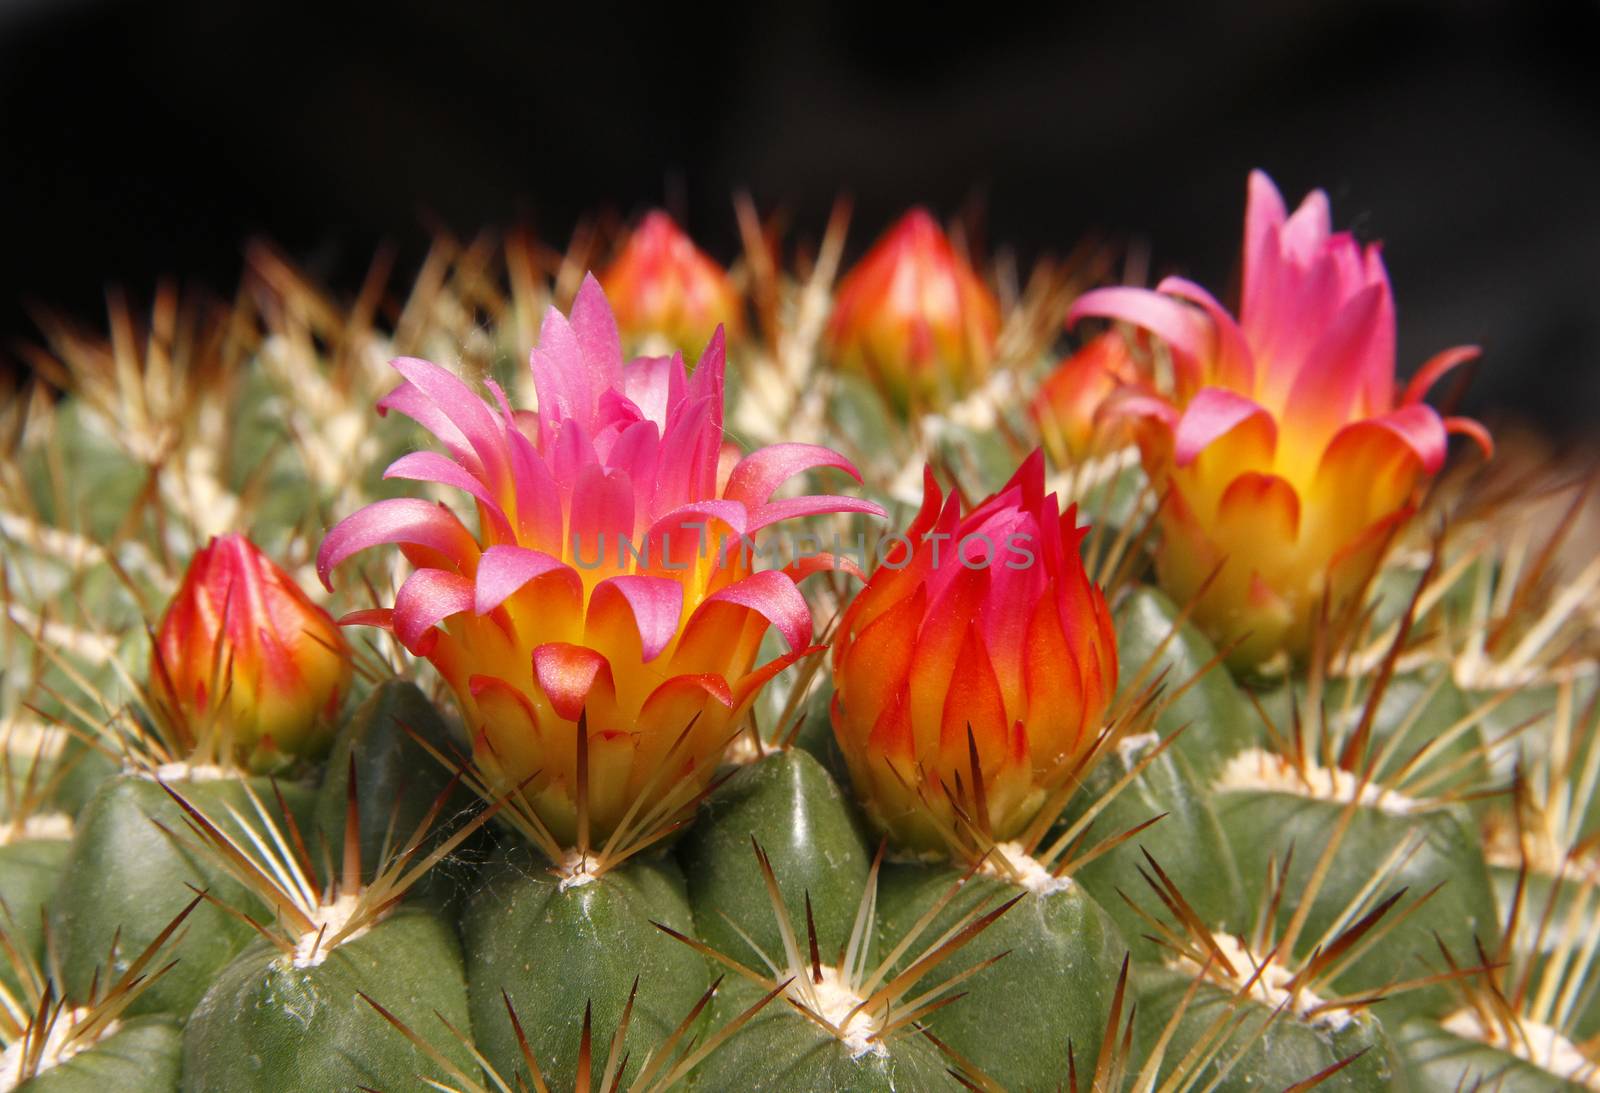 cactus flower_3 by gallofoto